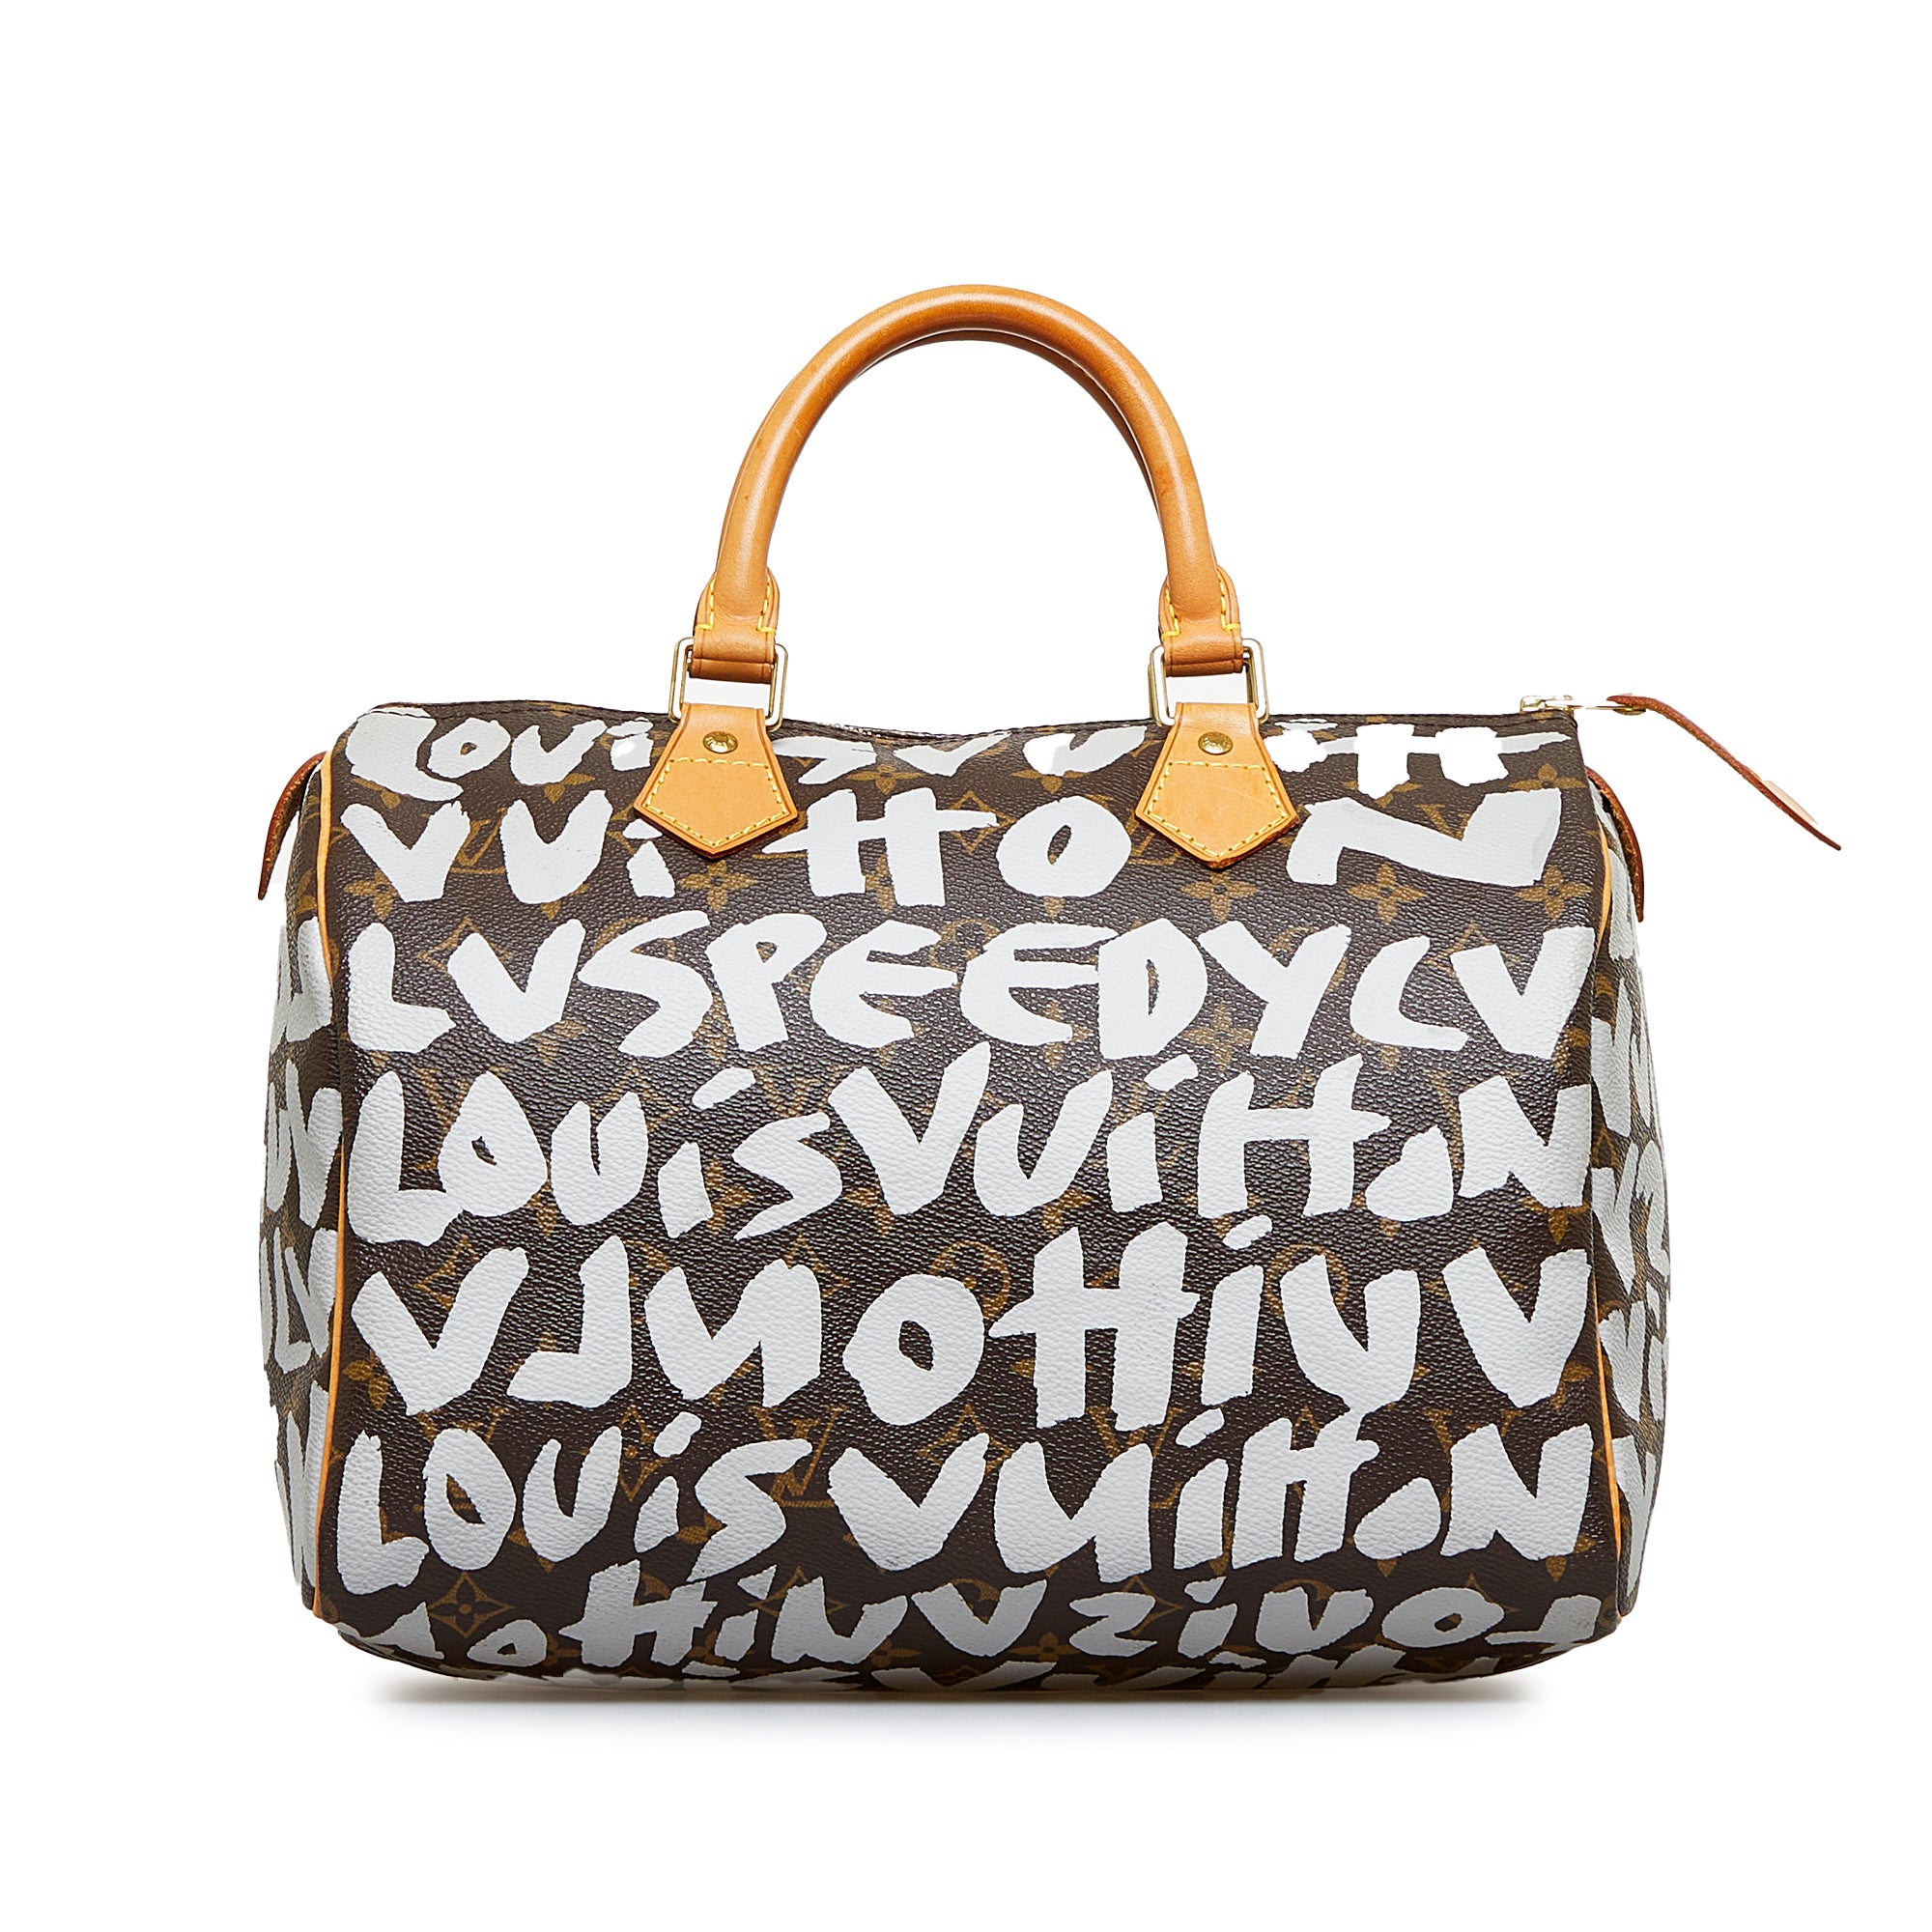 Petite Malle Bag Fashion Leather  Handbags M21489  LOUIS VUITTON